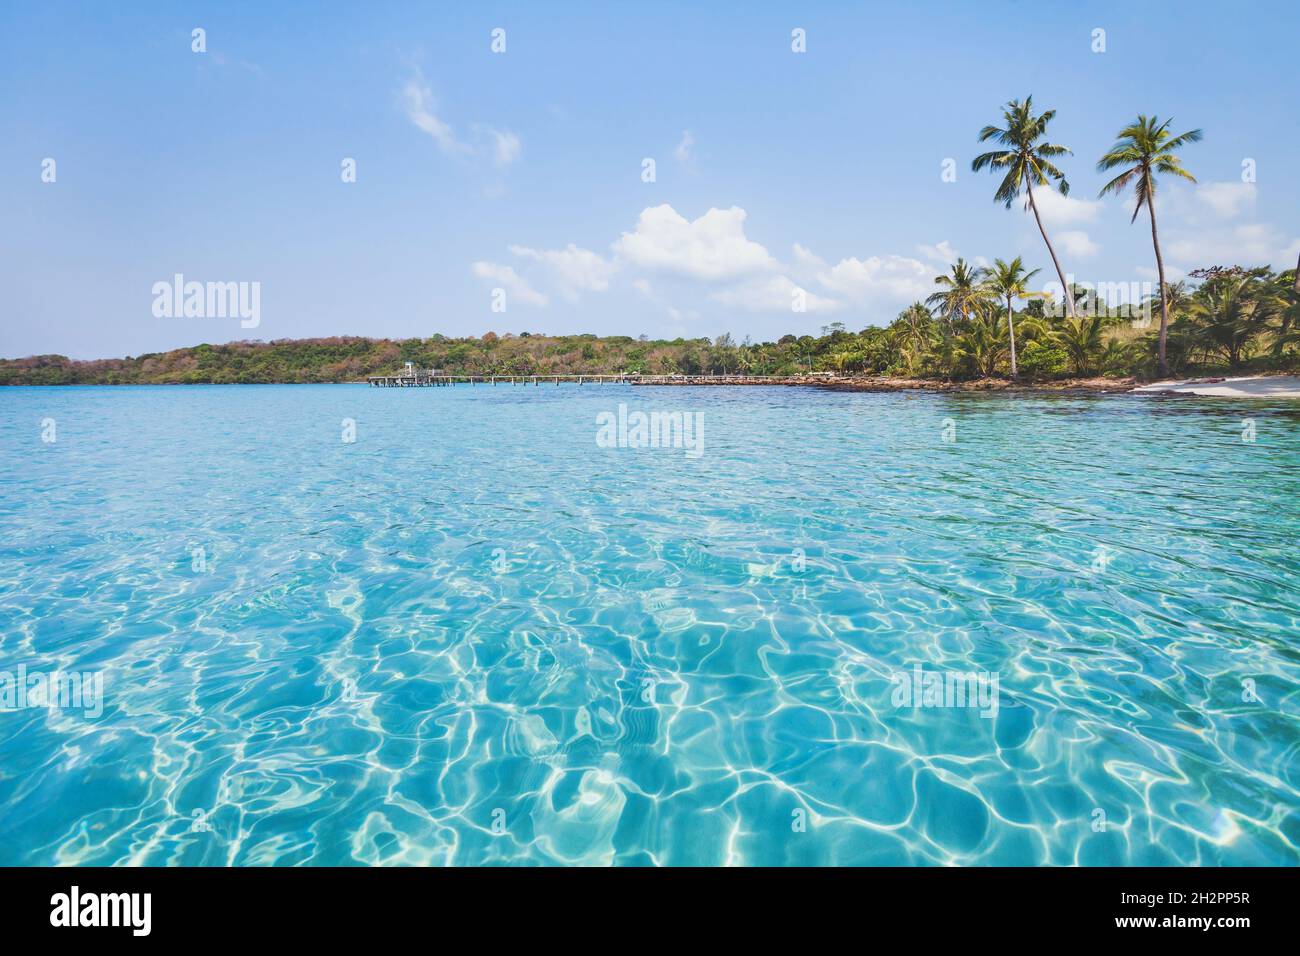 turquoise water on paradise beach on tropical island, holidays background, exotic tourism destination landscape Stock Photo